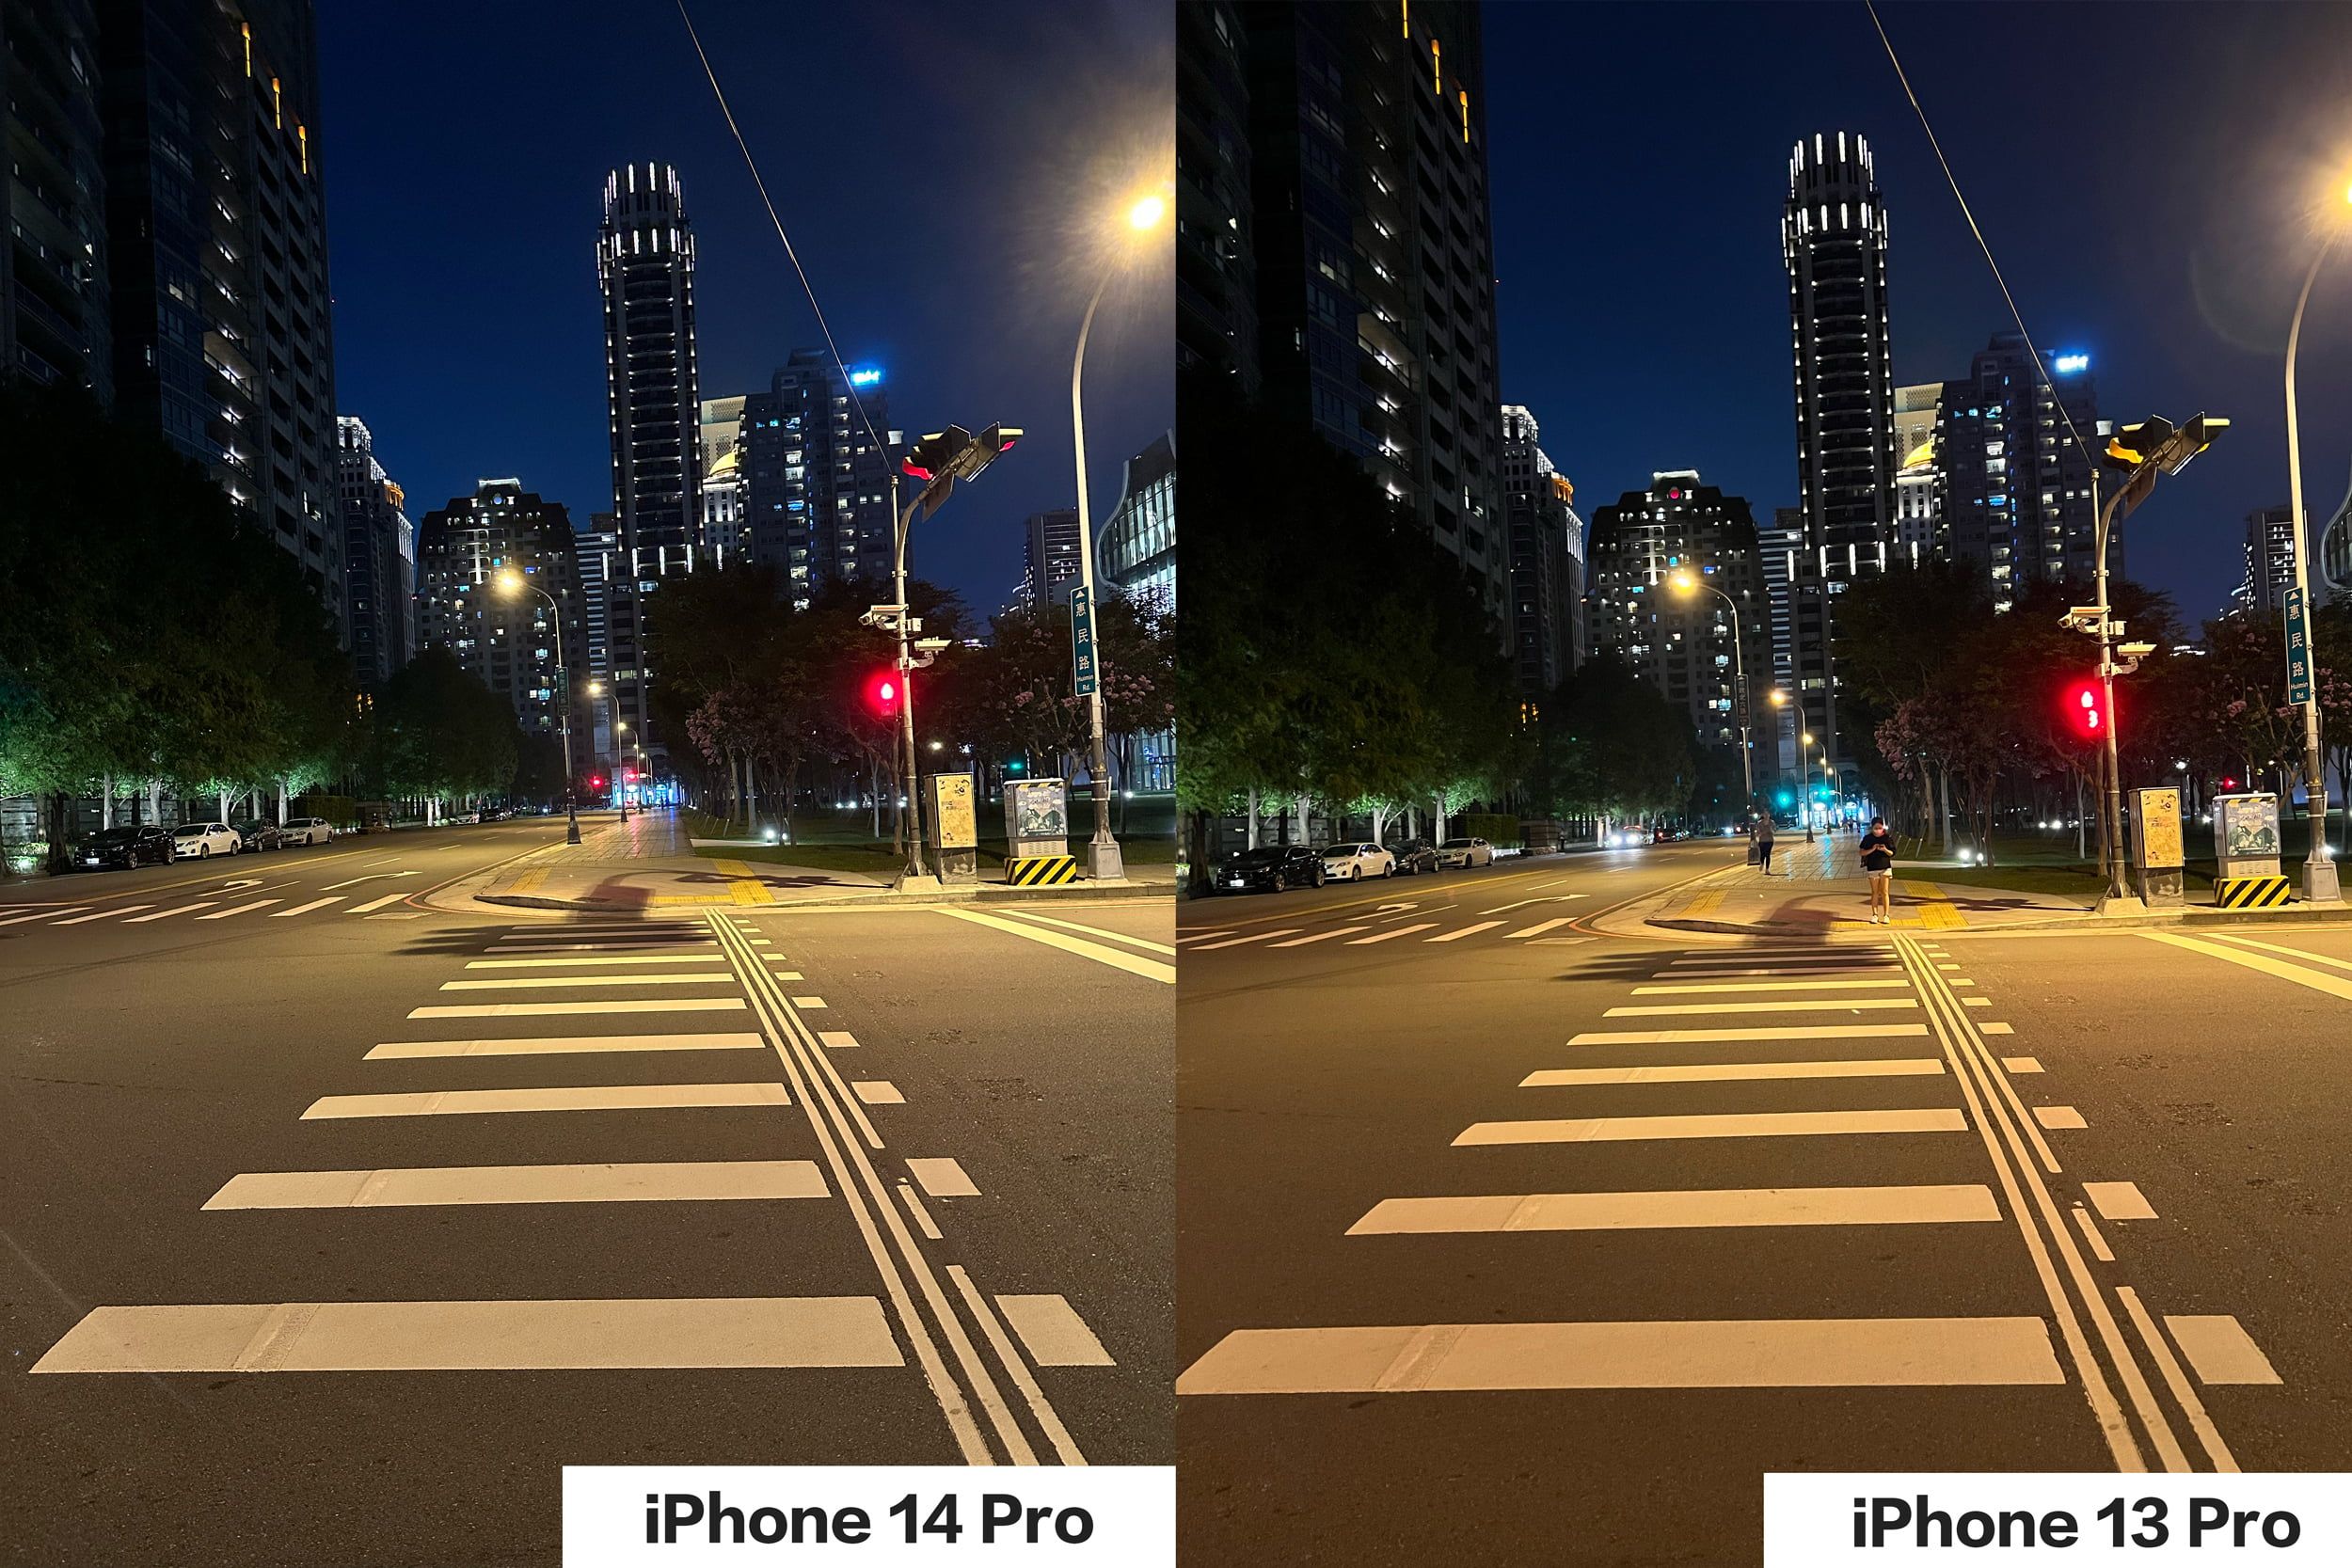 iPhone 14 Pro night shot comparison actual measurement 6